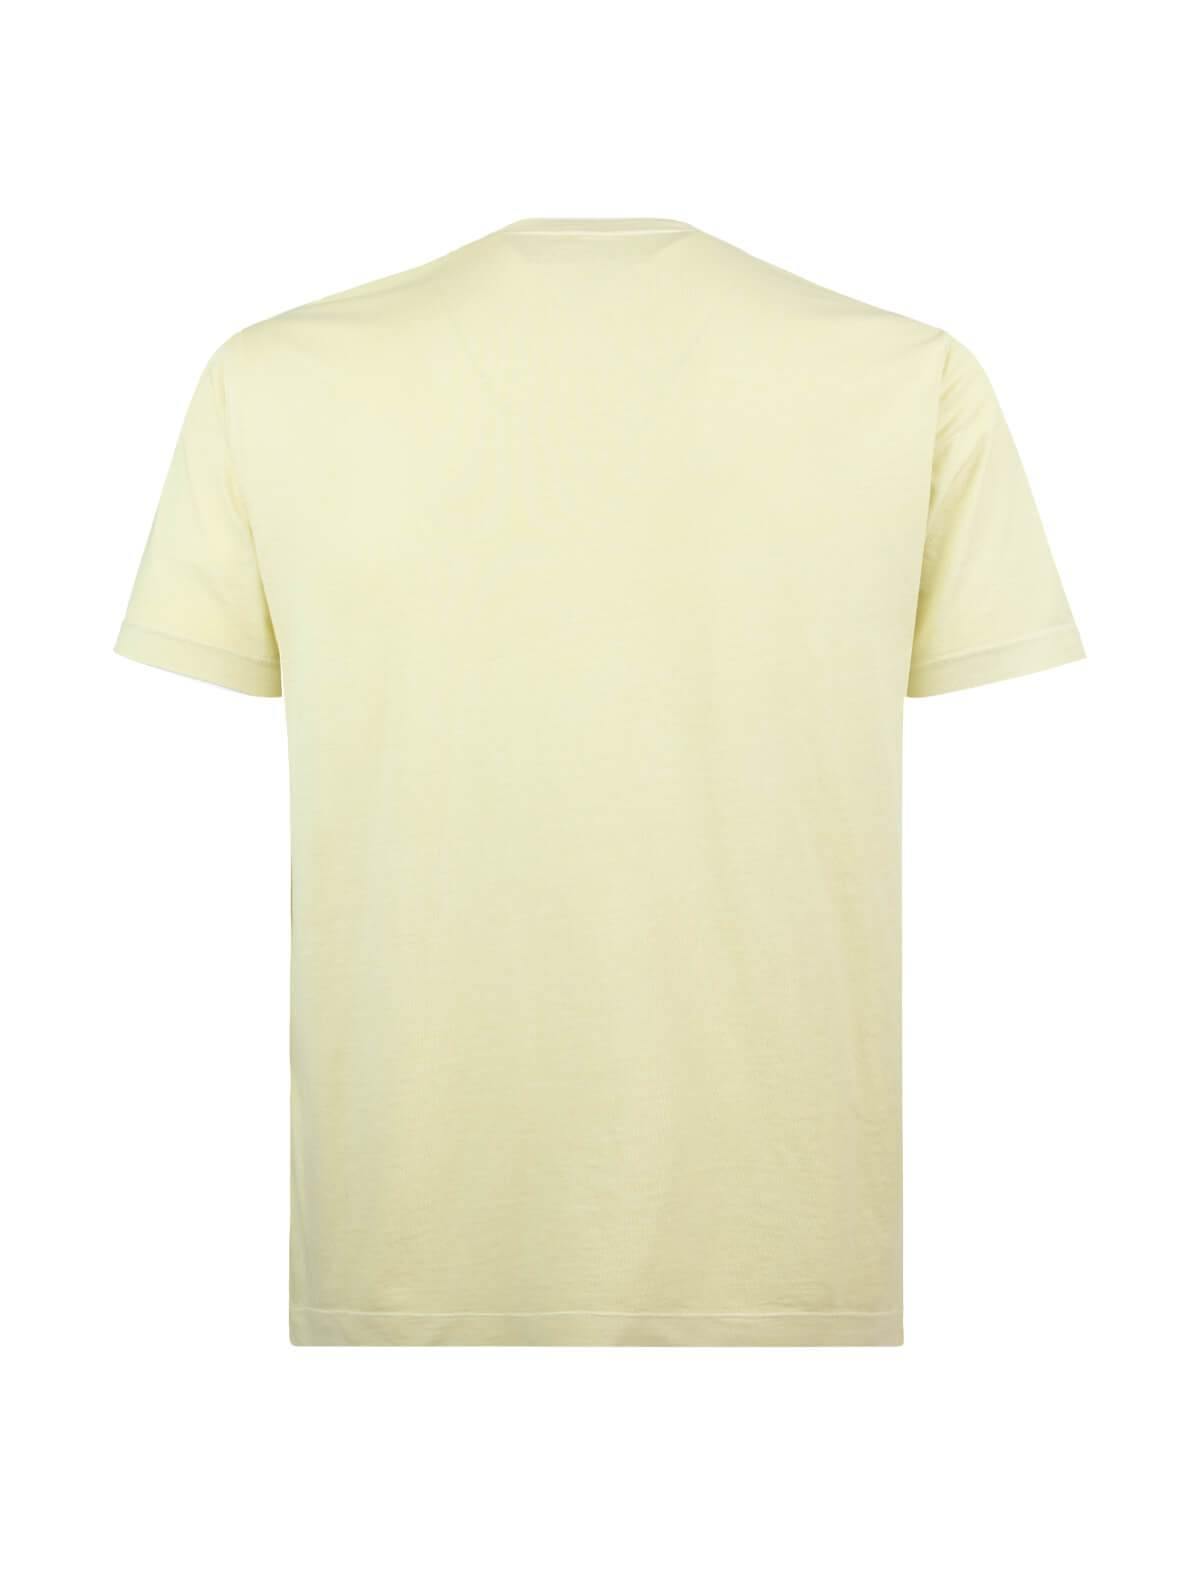 CIRCOLO 1901 Crew Neck Cotton T-Shirt in Pale Yellow | CLOSET Singapore